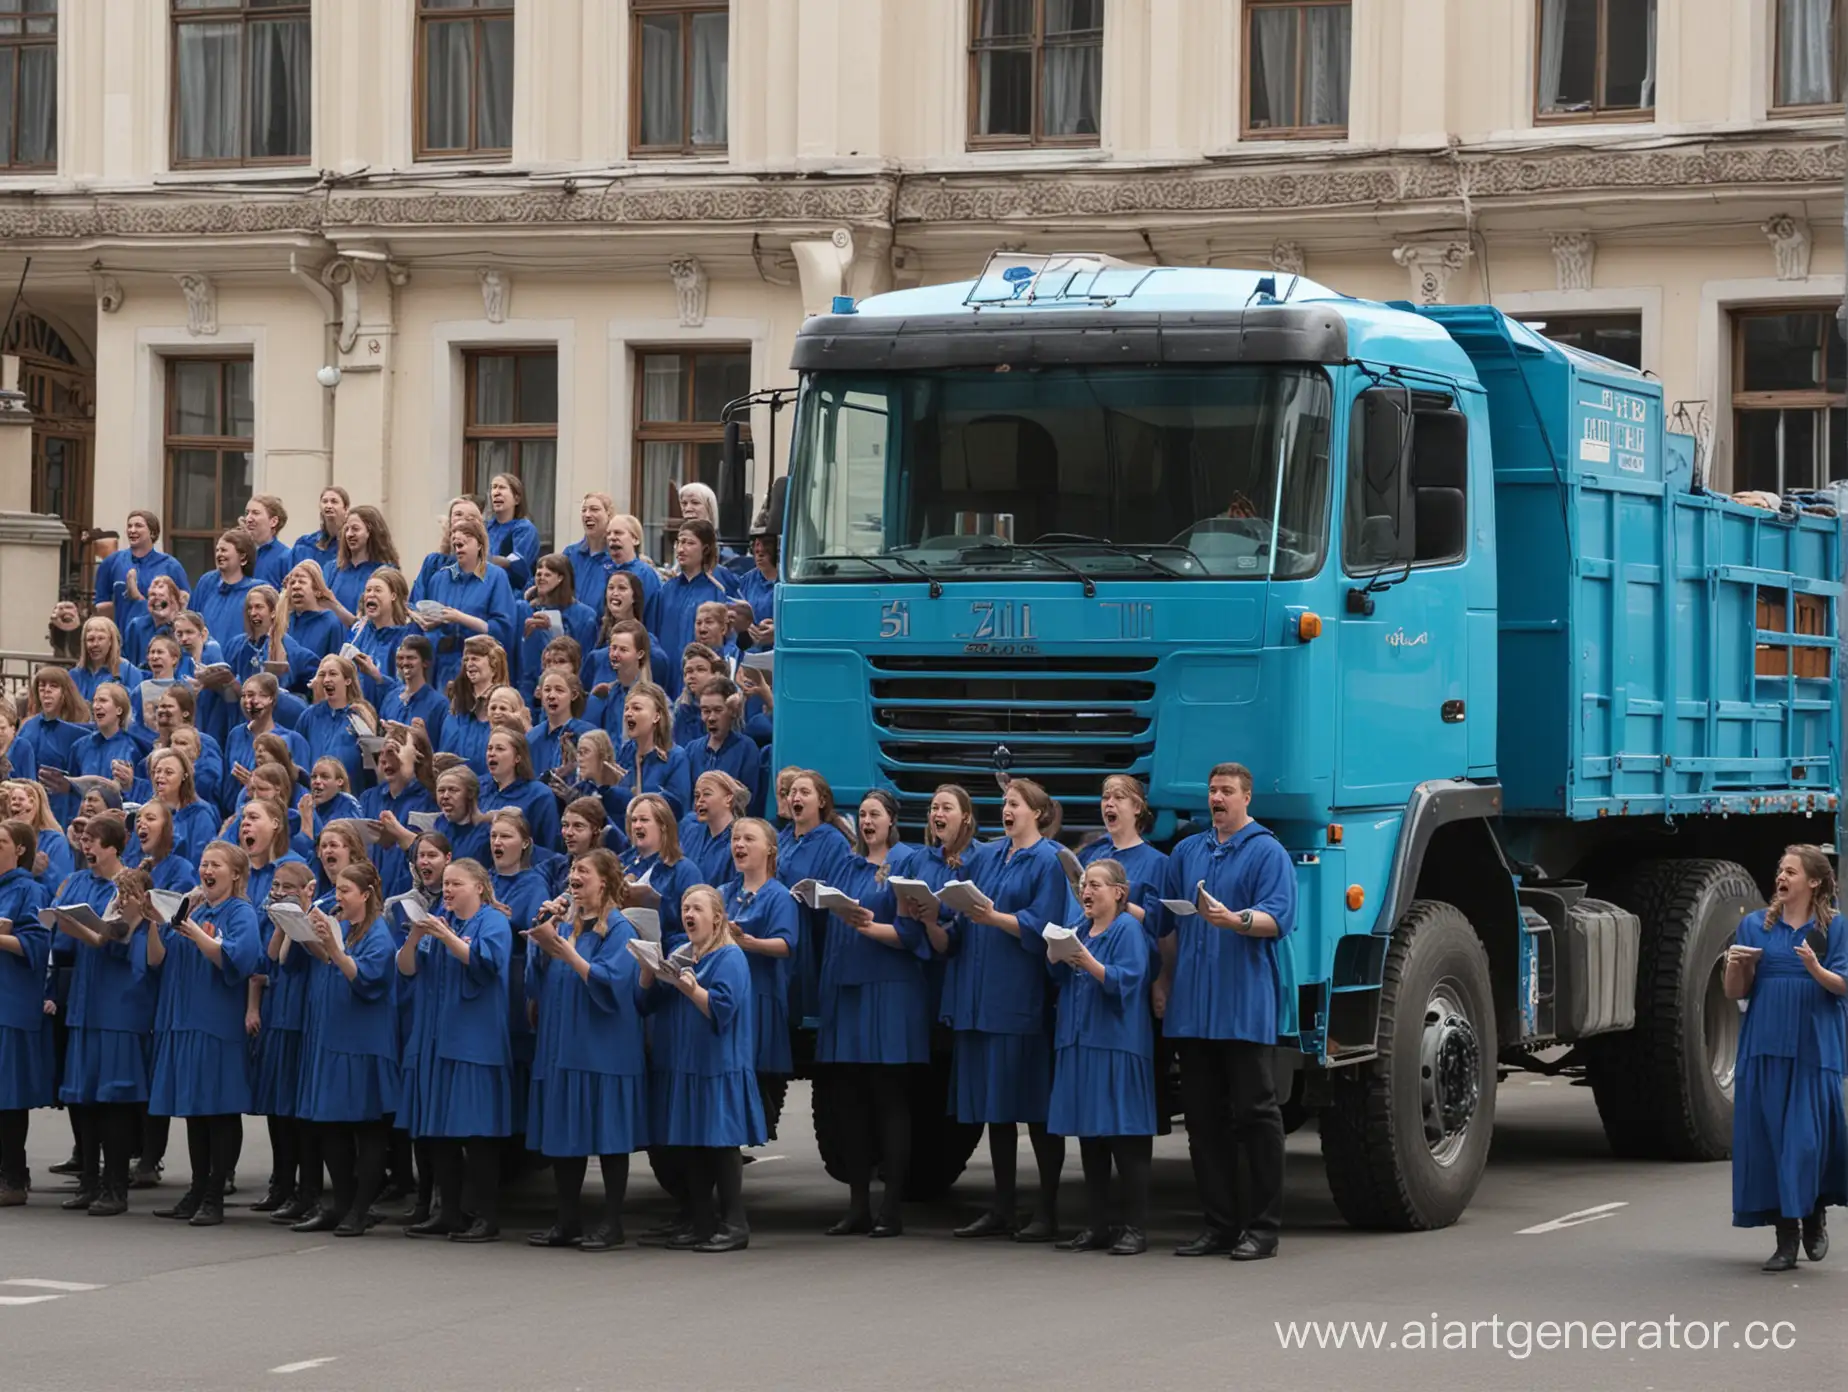 Harmonious-Choir-Performance-by-Singers-in-a-Blue-ZIL-Truck